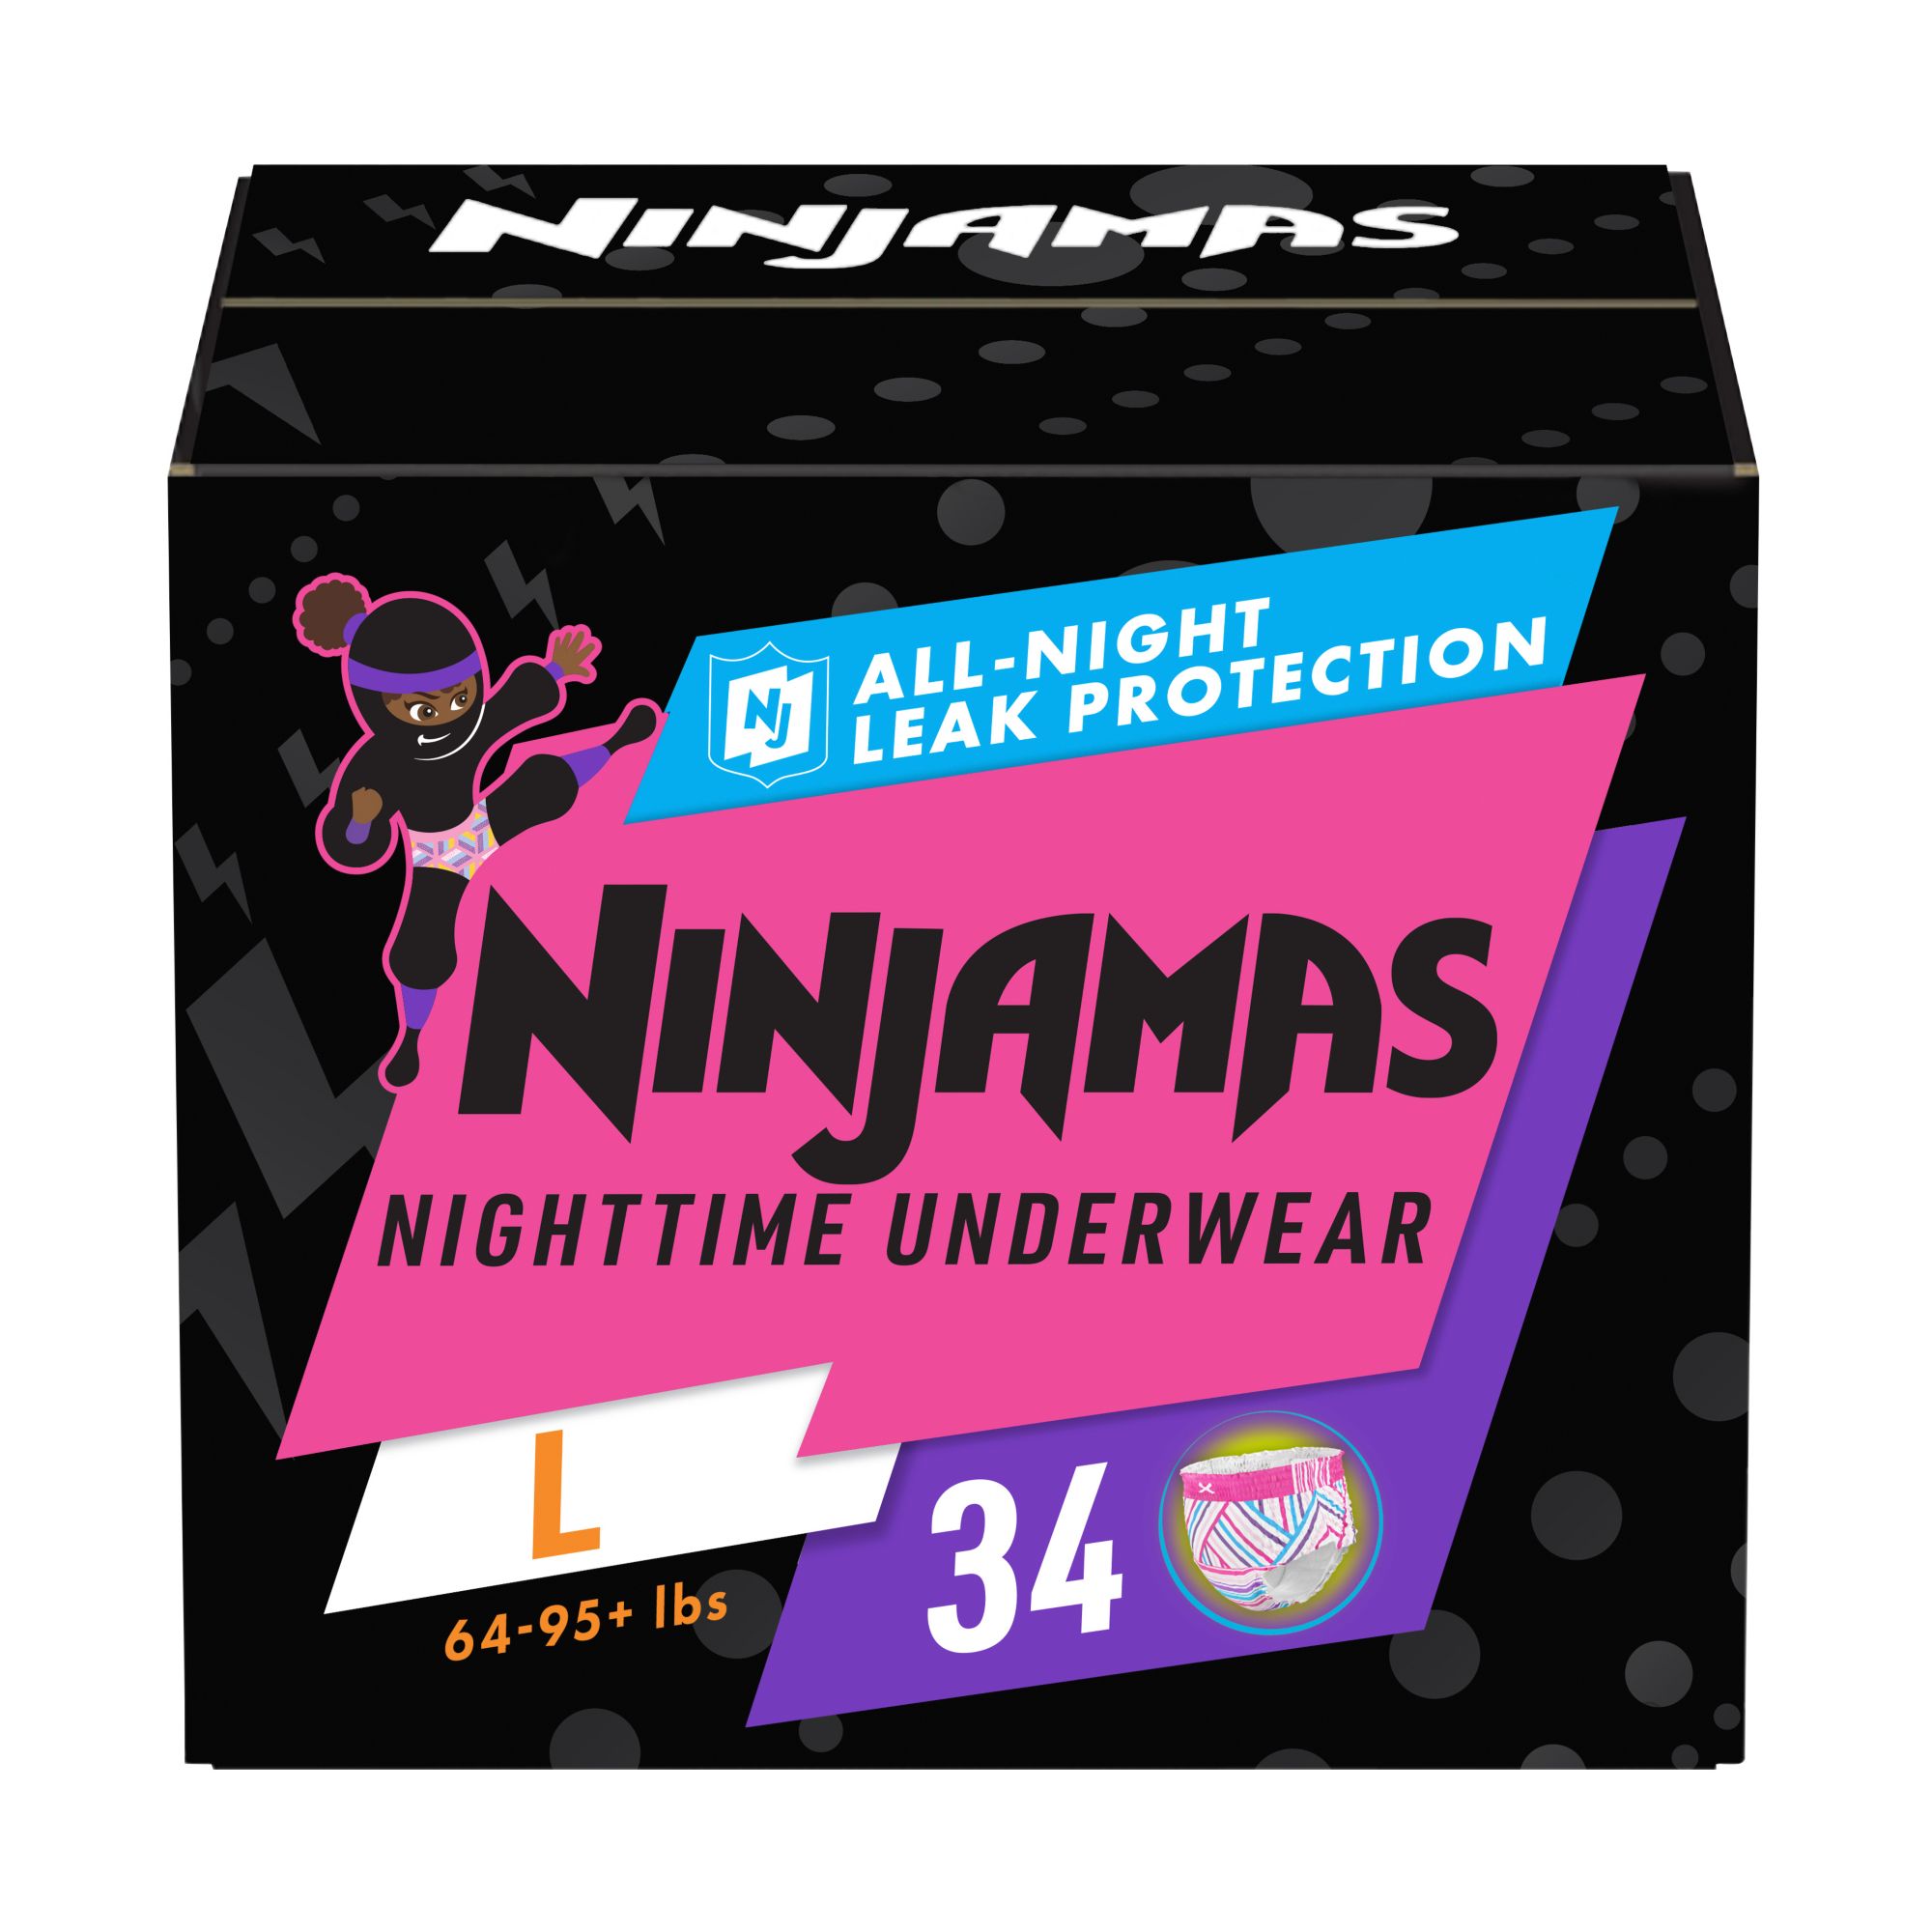 Ninjamas Underwear, Nighttime, L/XL (64-125 lbs), Super Pack - 34 underwear